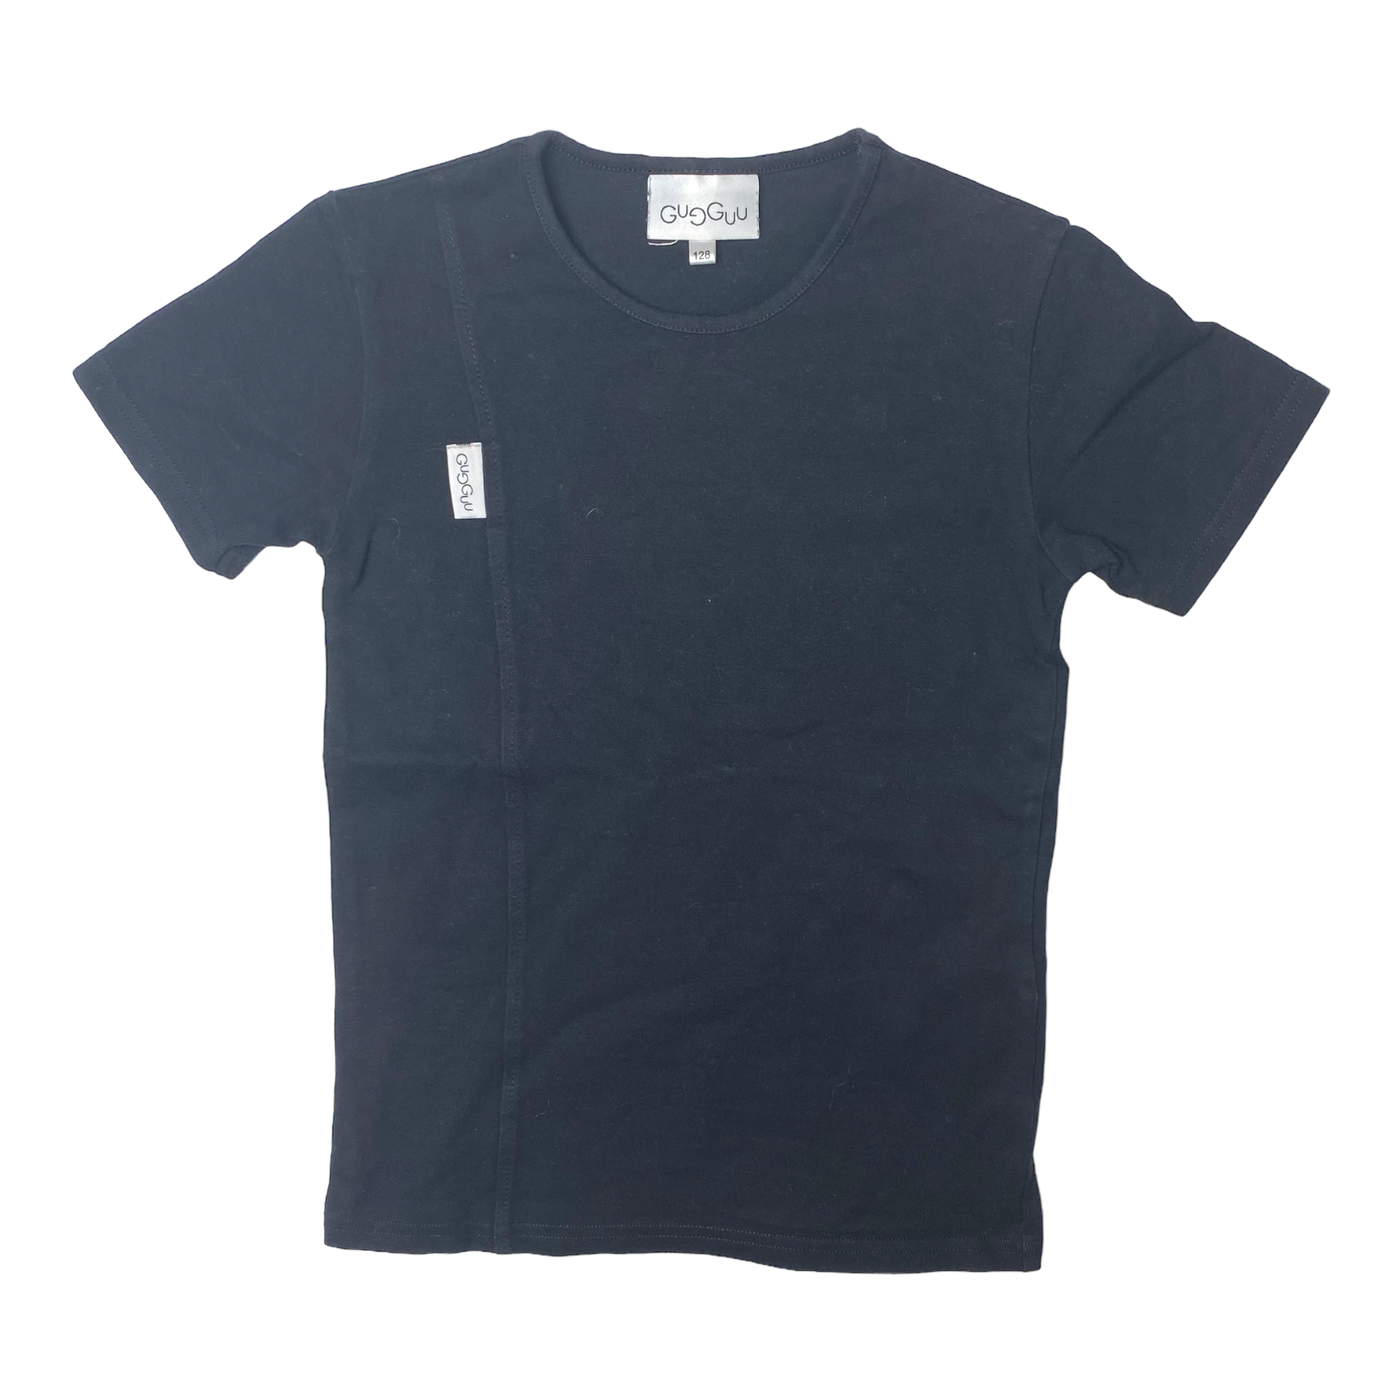 Gugguu t-shirt, black | 128cm